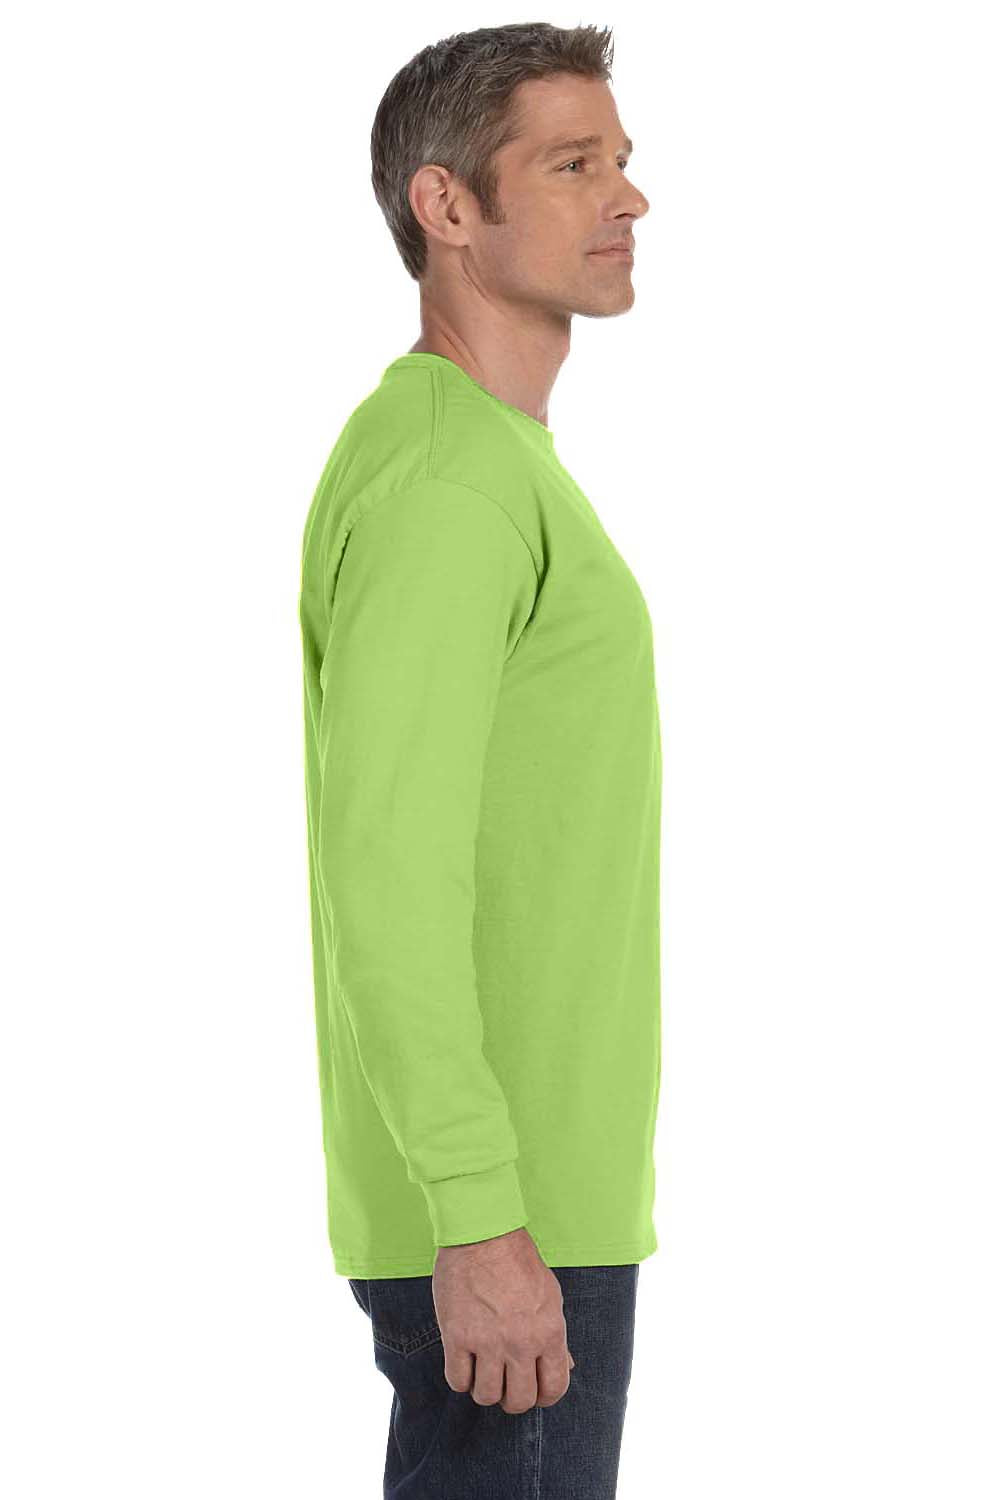 Jerzees 29L Mens Dri-Power Moisture Wicking Long Sleeve Crewneck T-Shirt Neon Green Side